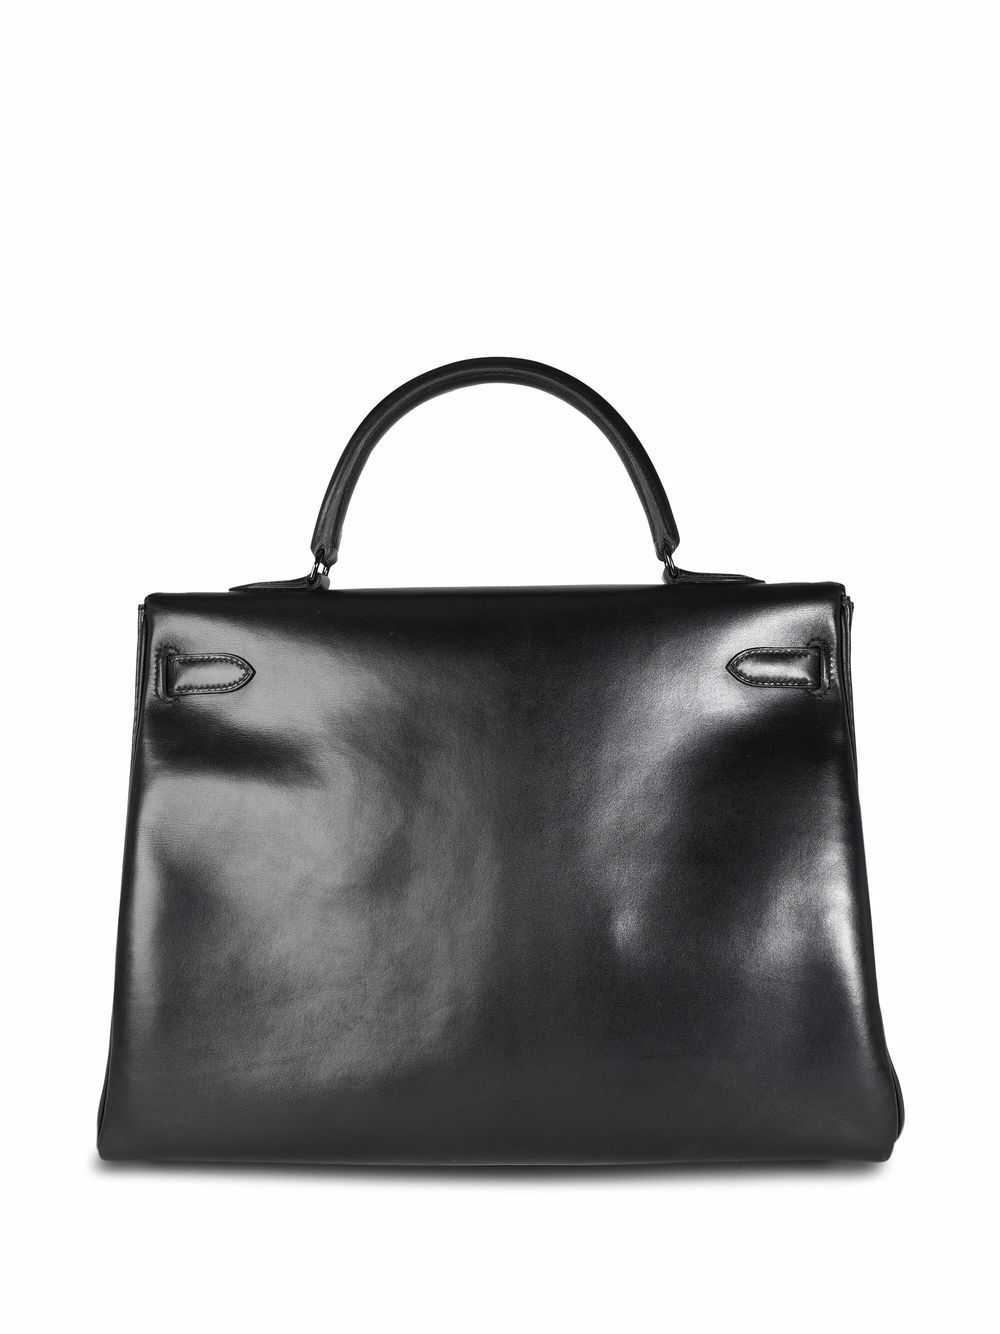 Hermès Pre-Owned Kelly 35 handbag - Black - image 2